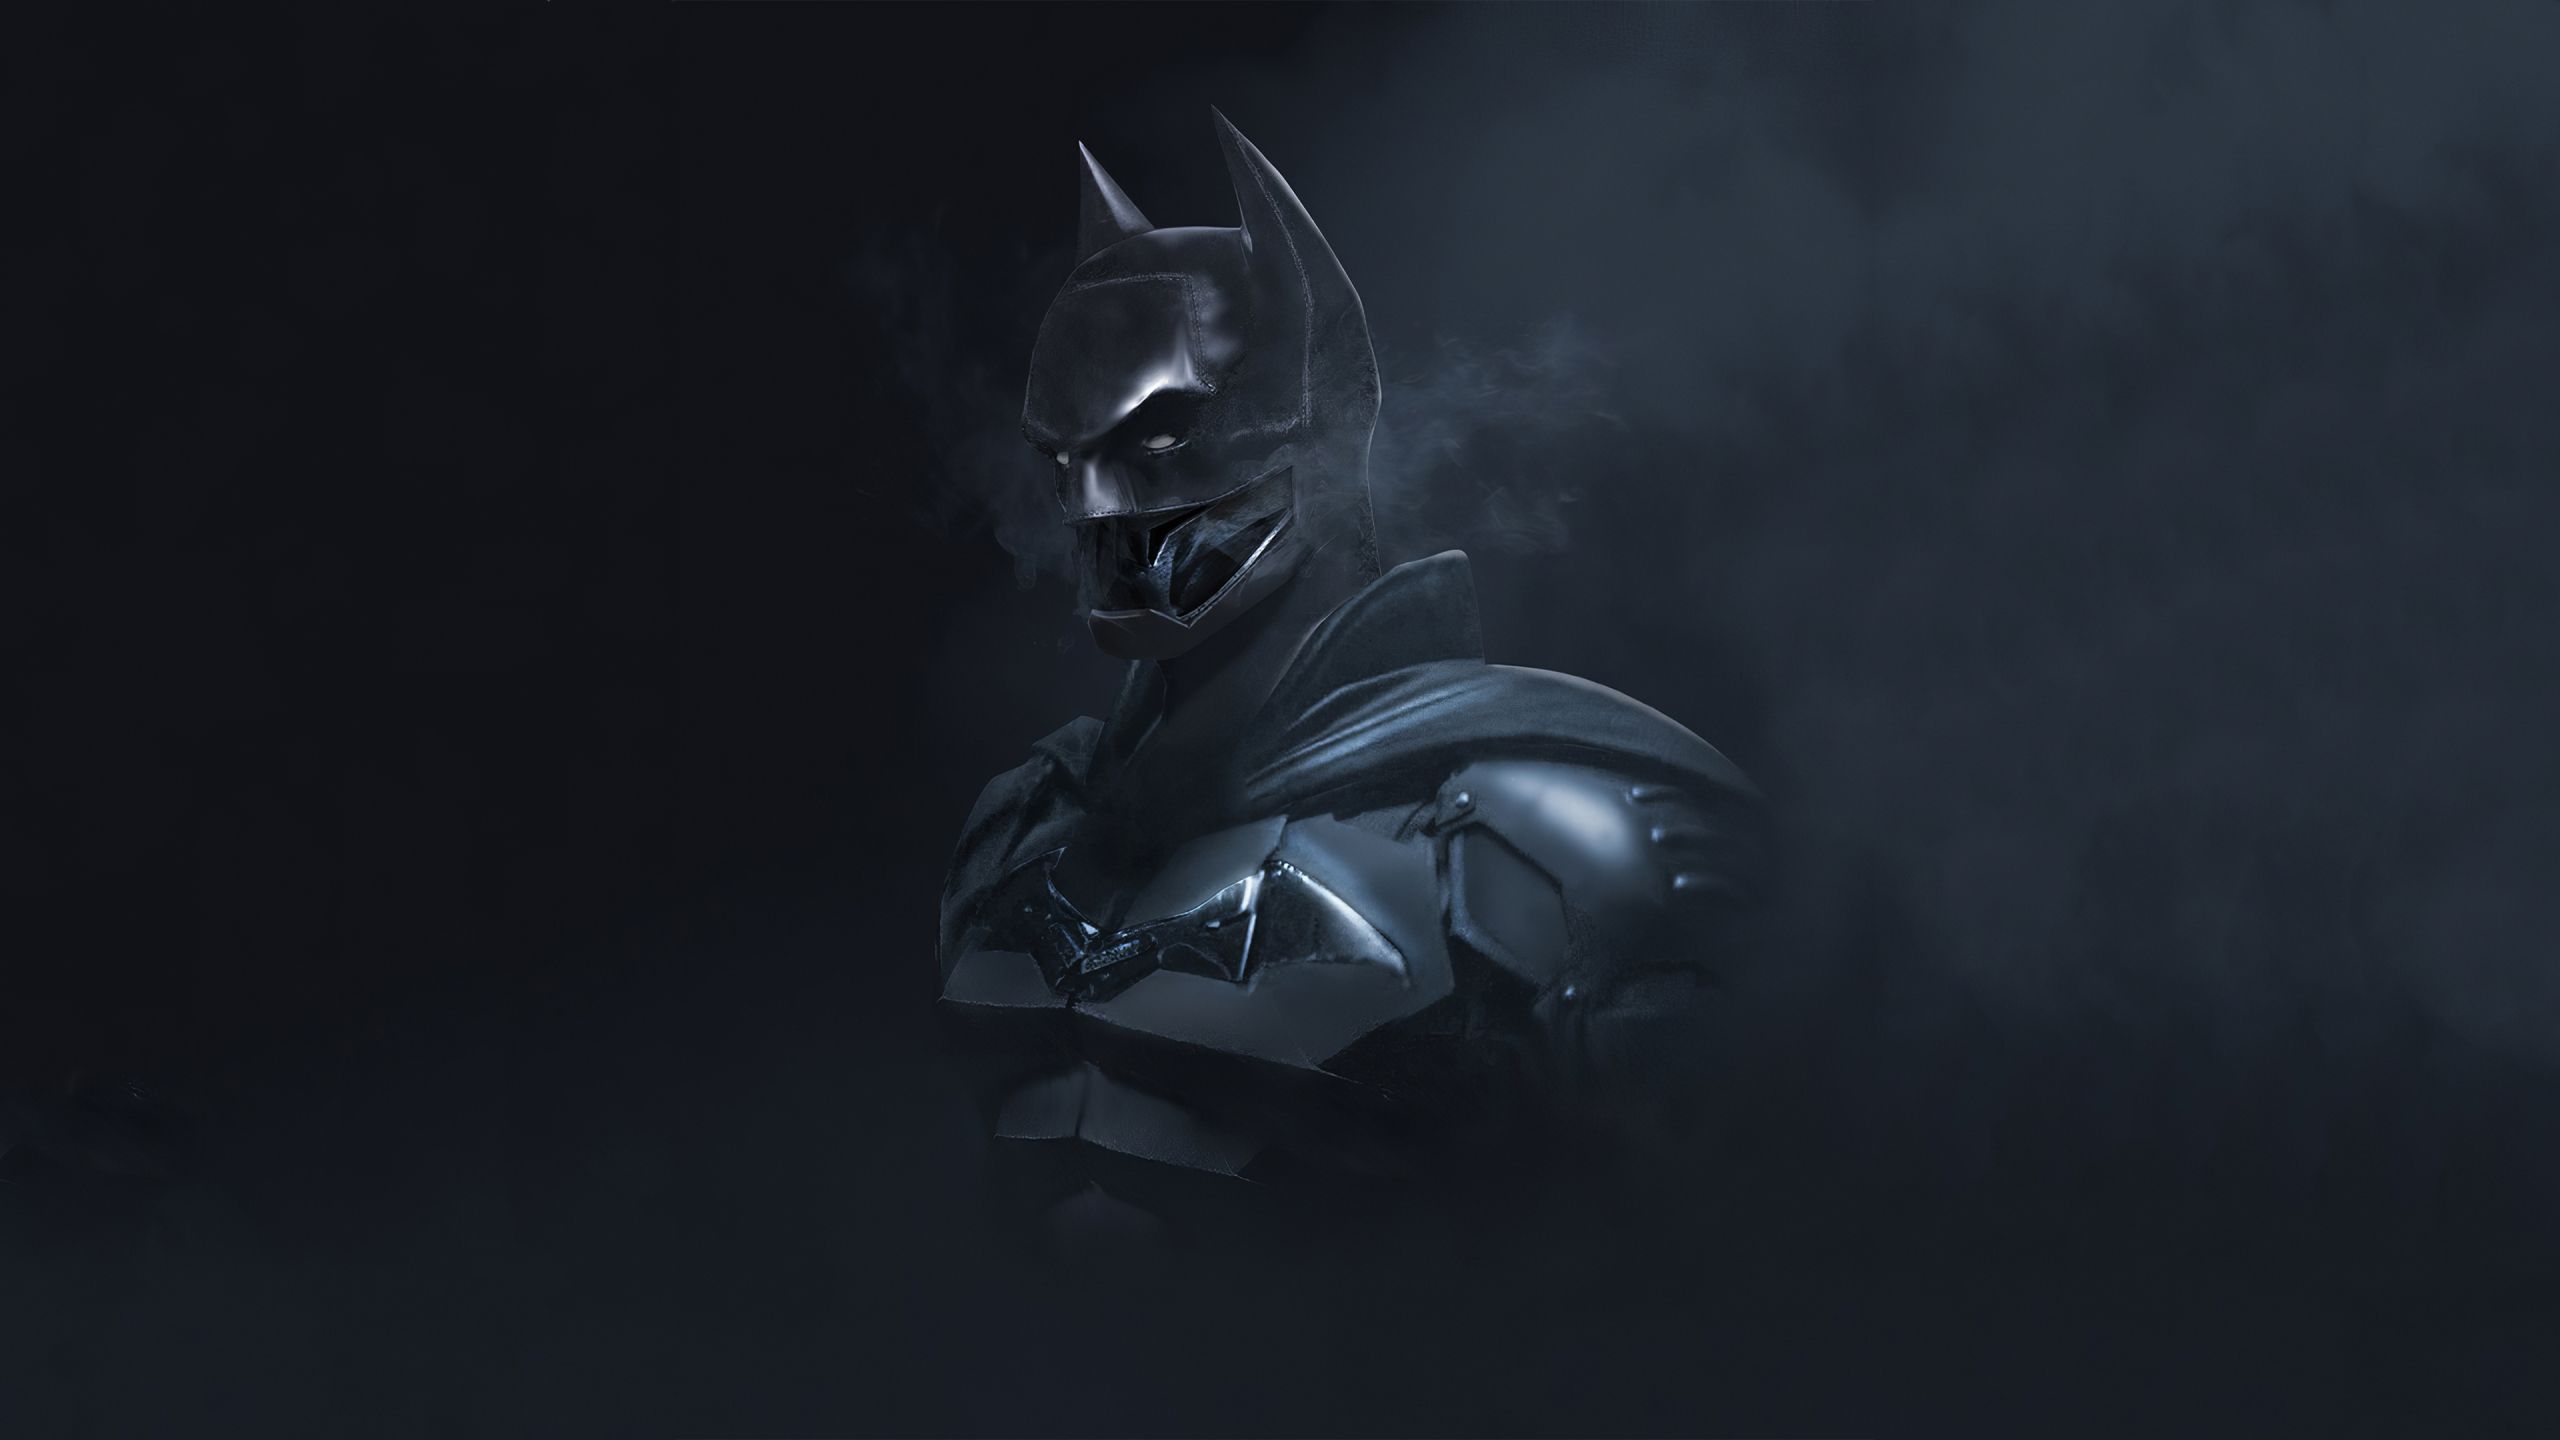 New Batman Suit 4K 1440P Resolution Wallpaper, HD Superheroes 4K Wallpaper, Image, Photo and Background